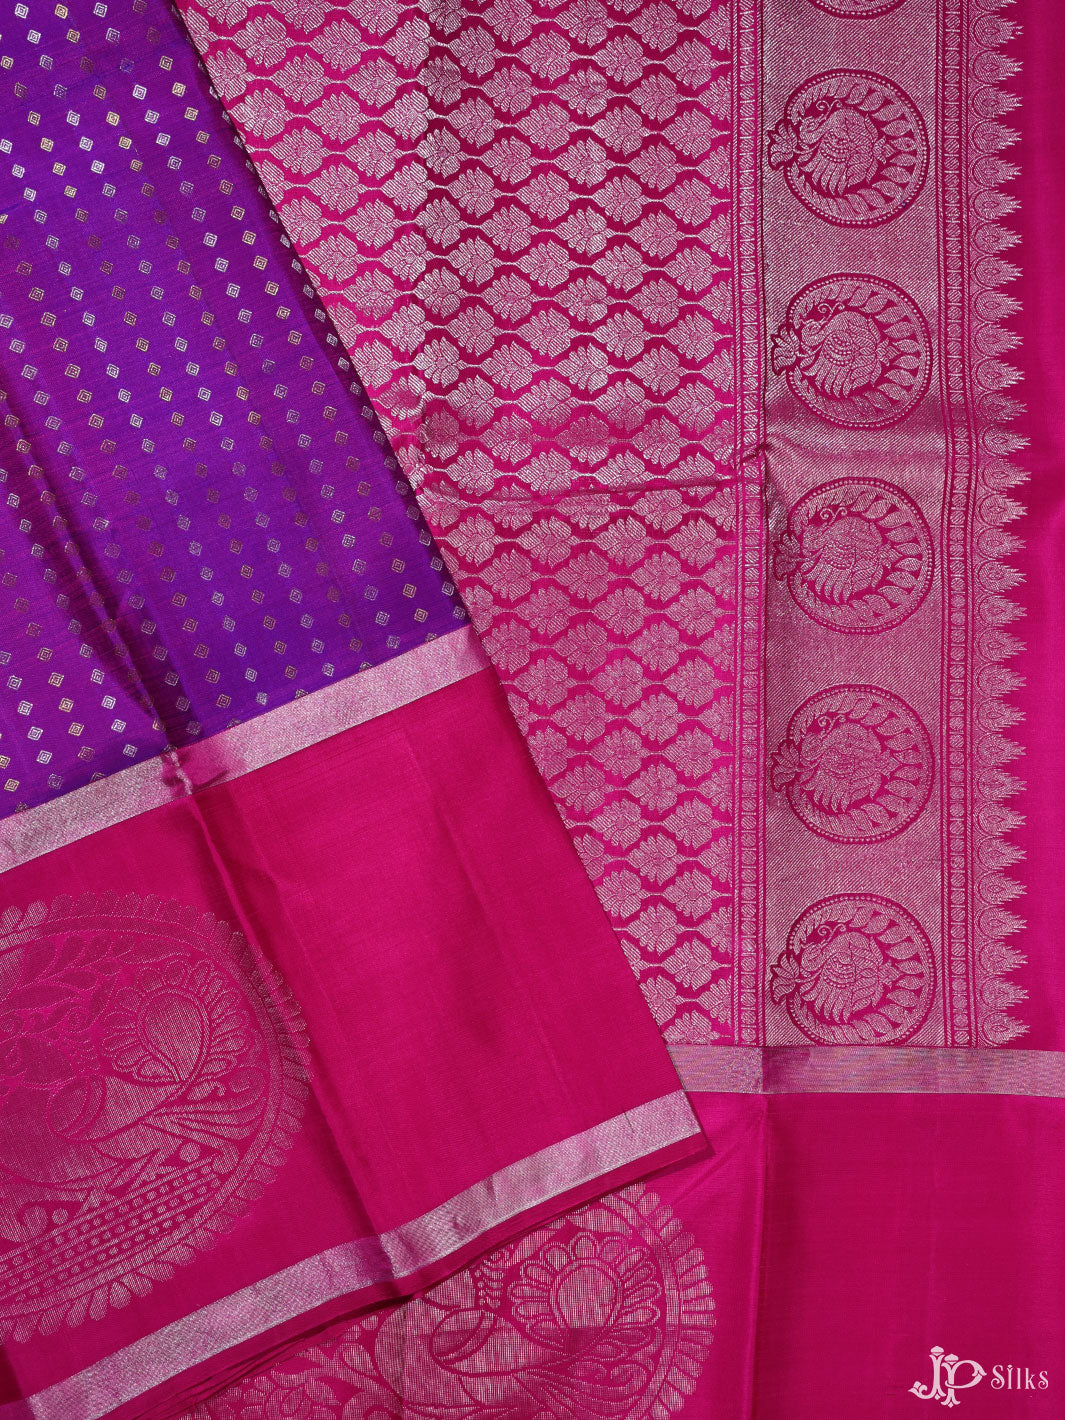 Dual Tone Purple and Pink Kanchipuram Silk Saree - A2547 - View 5